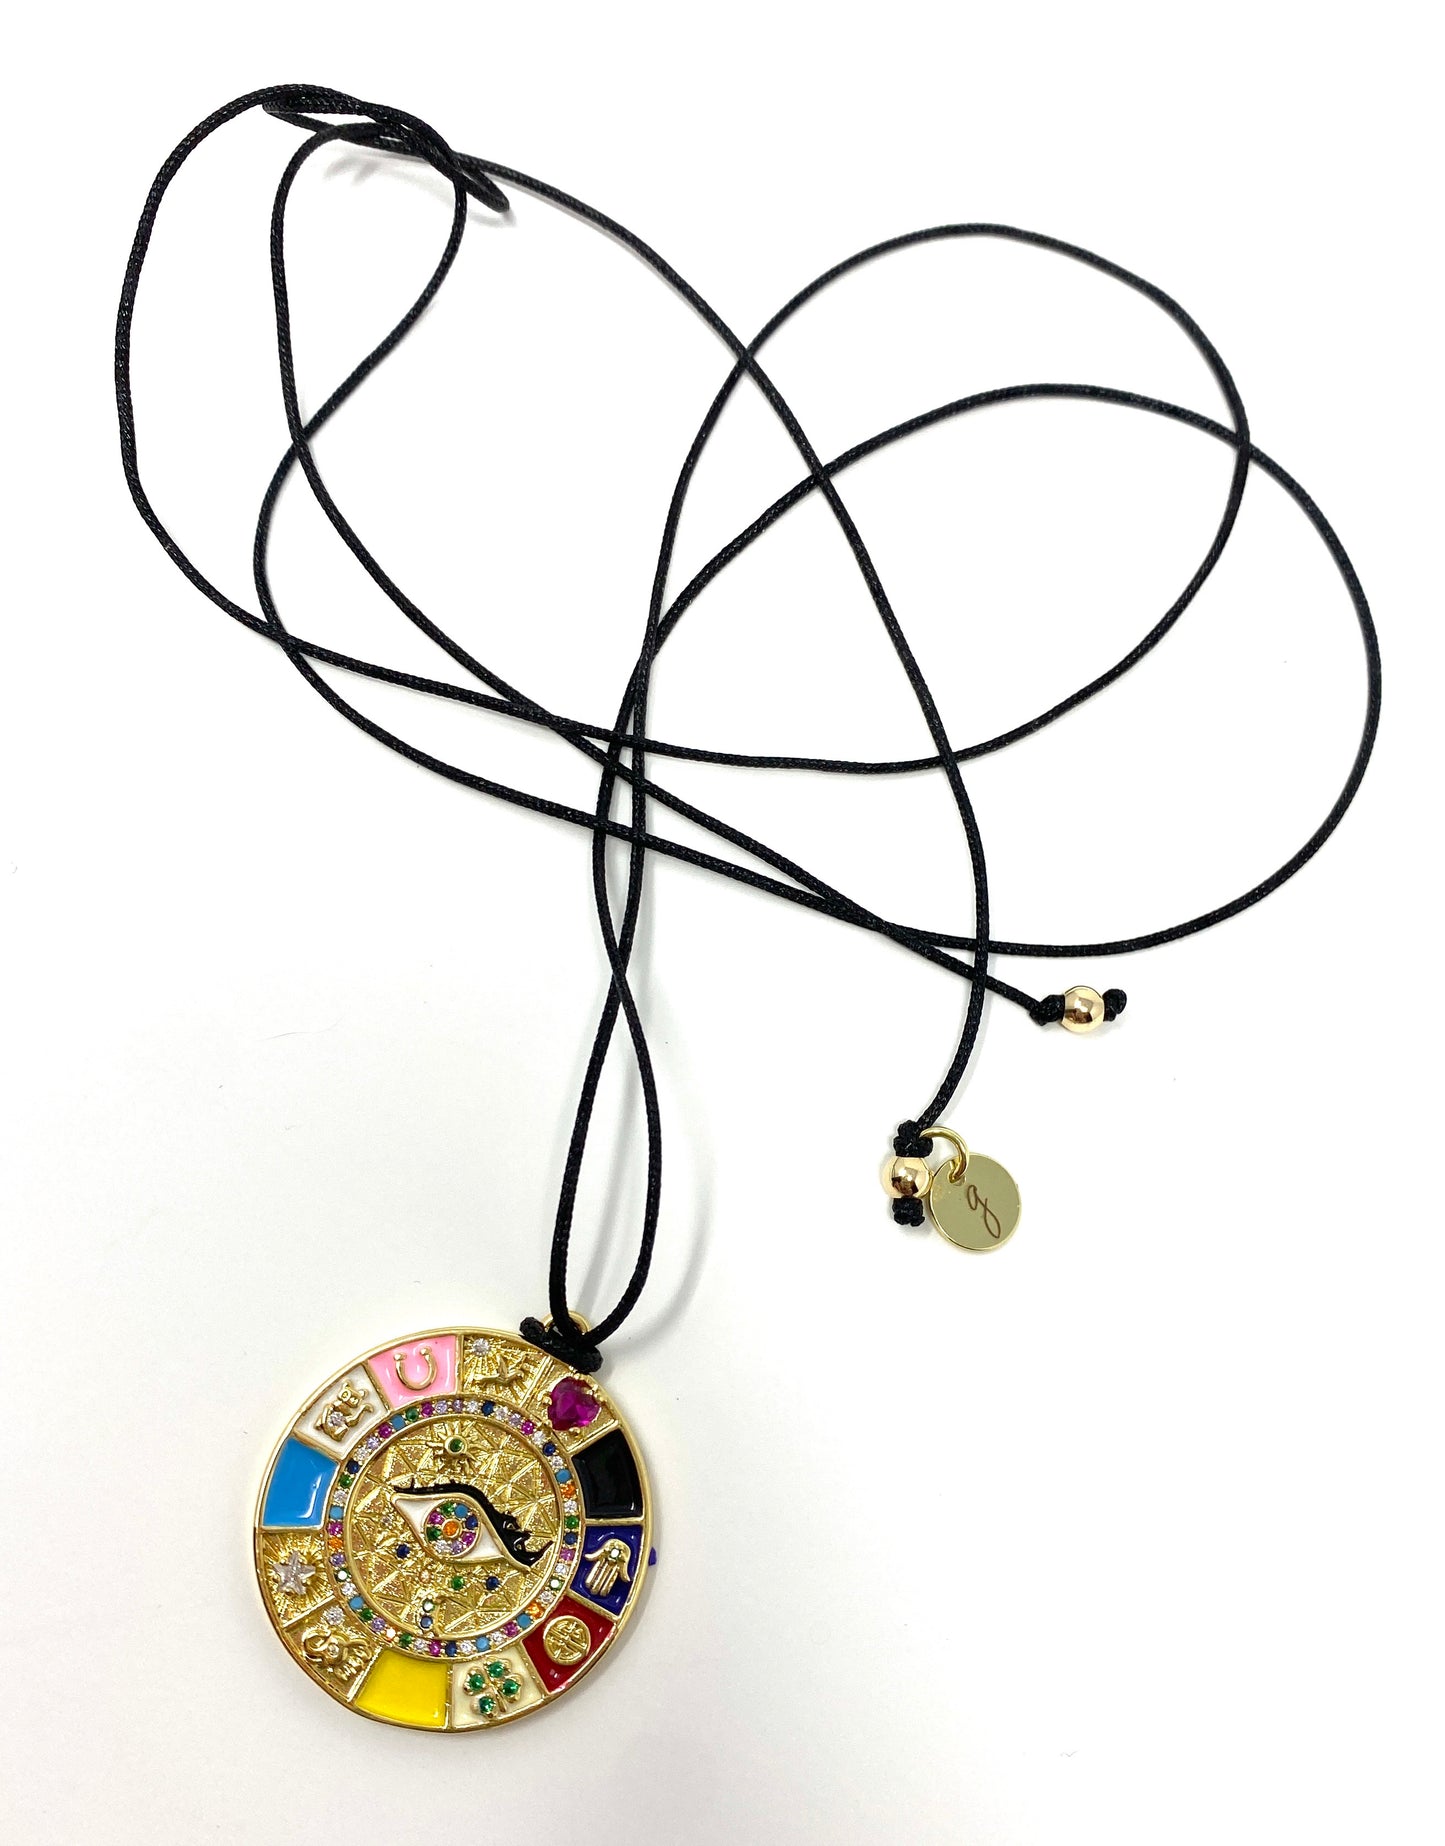 Black Nylon Cord Necklace With Enamel and CZ Pendant